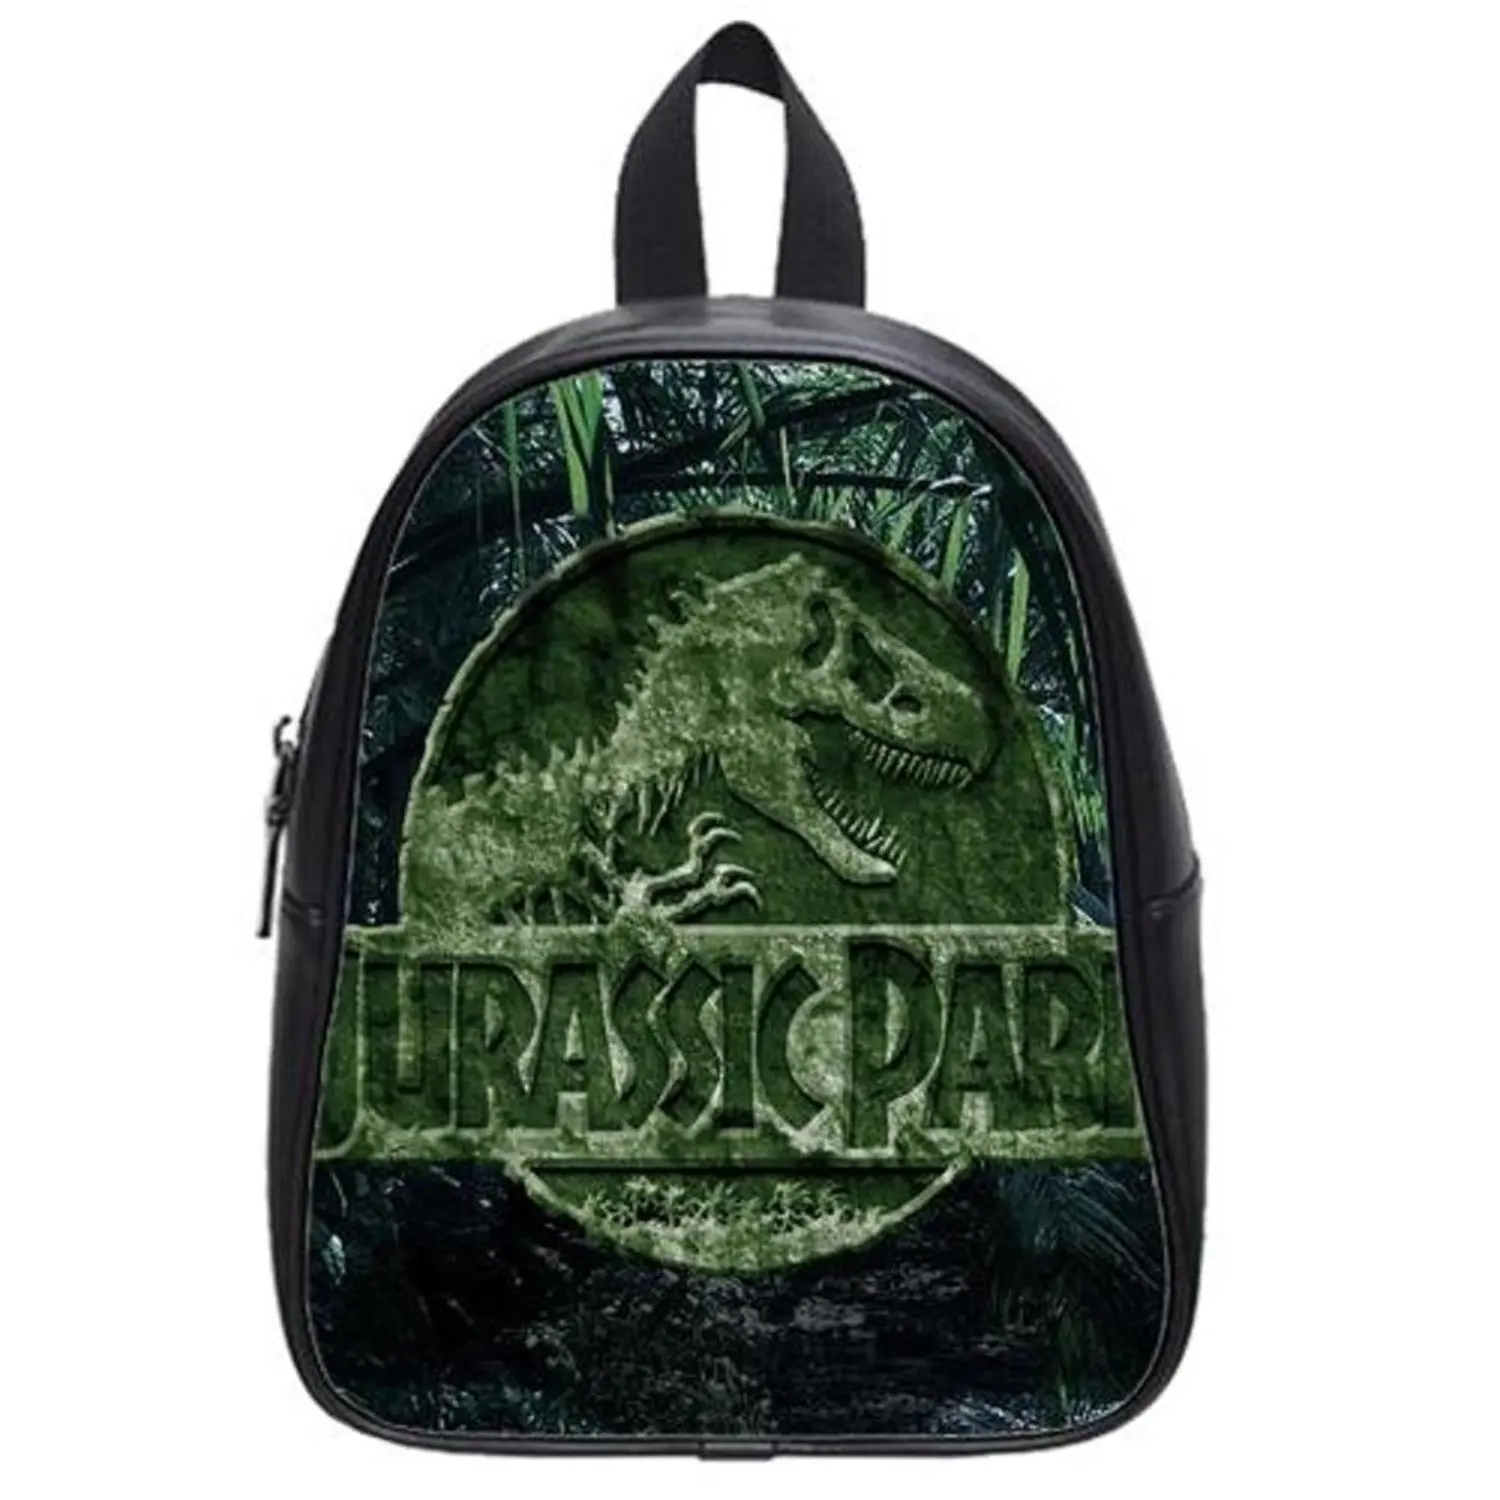 Buy Jurassic Park Custom Durable Case Carrying Bag for Notebook Laptop ...